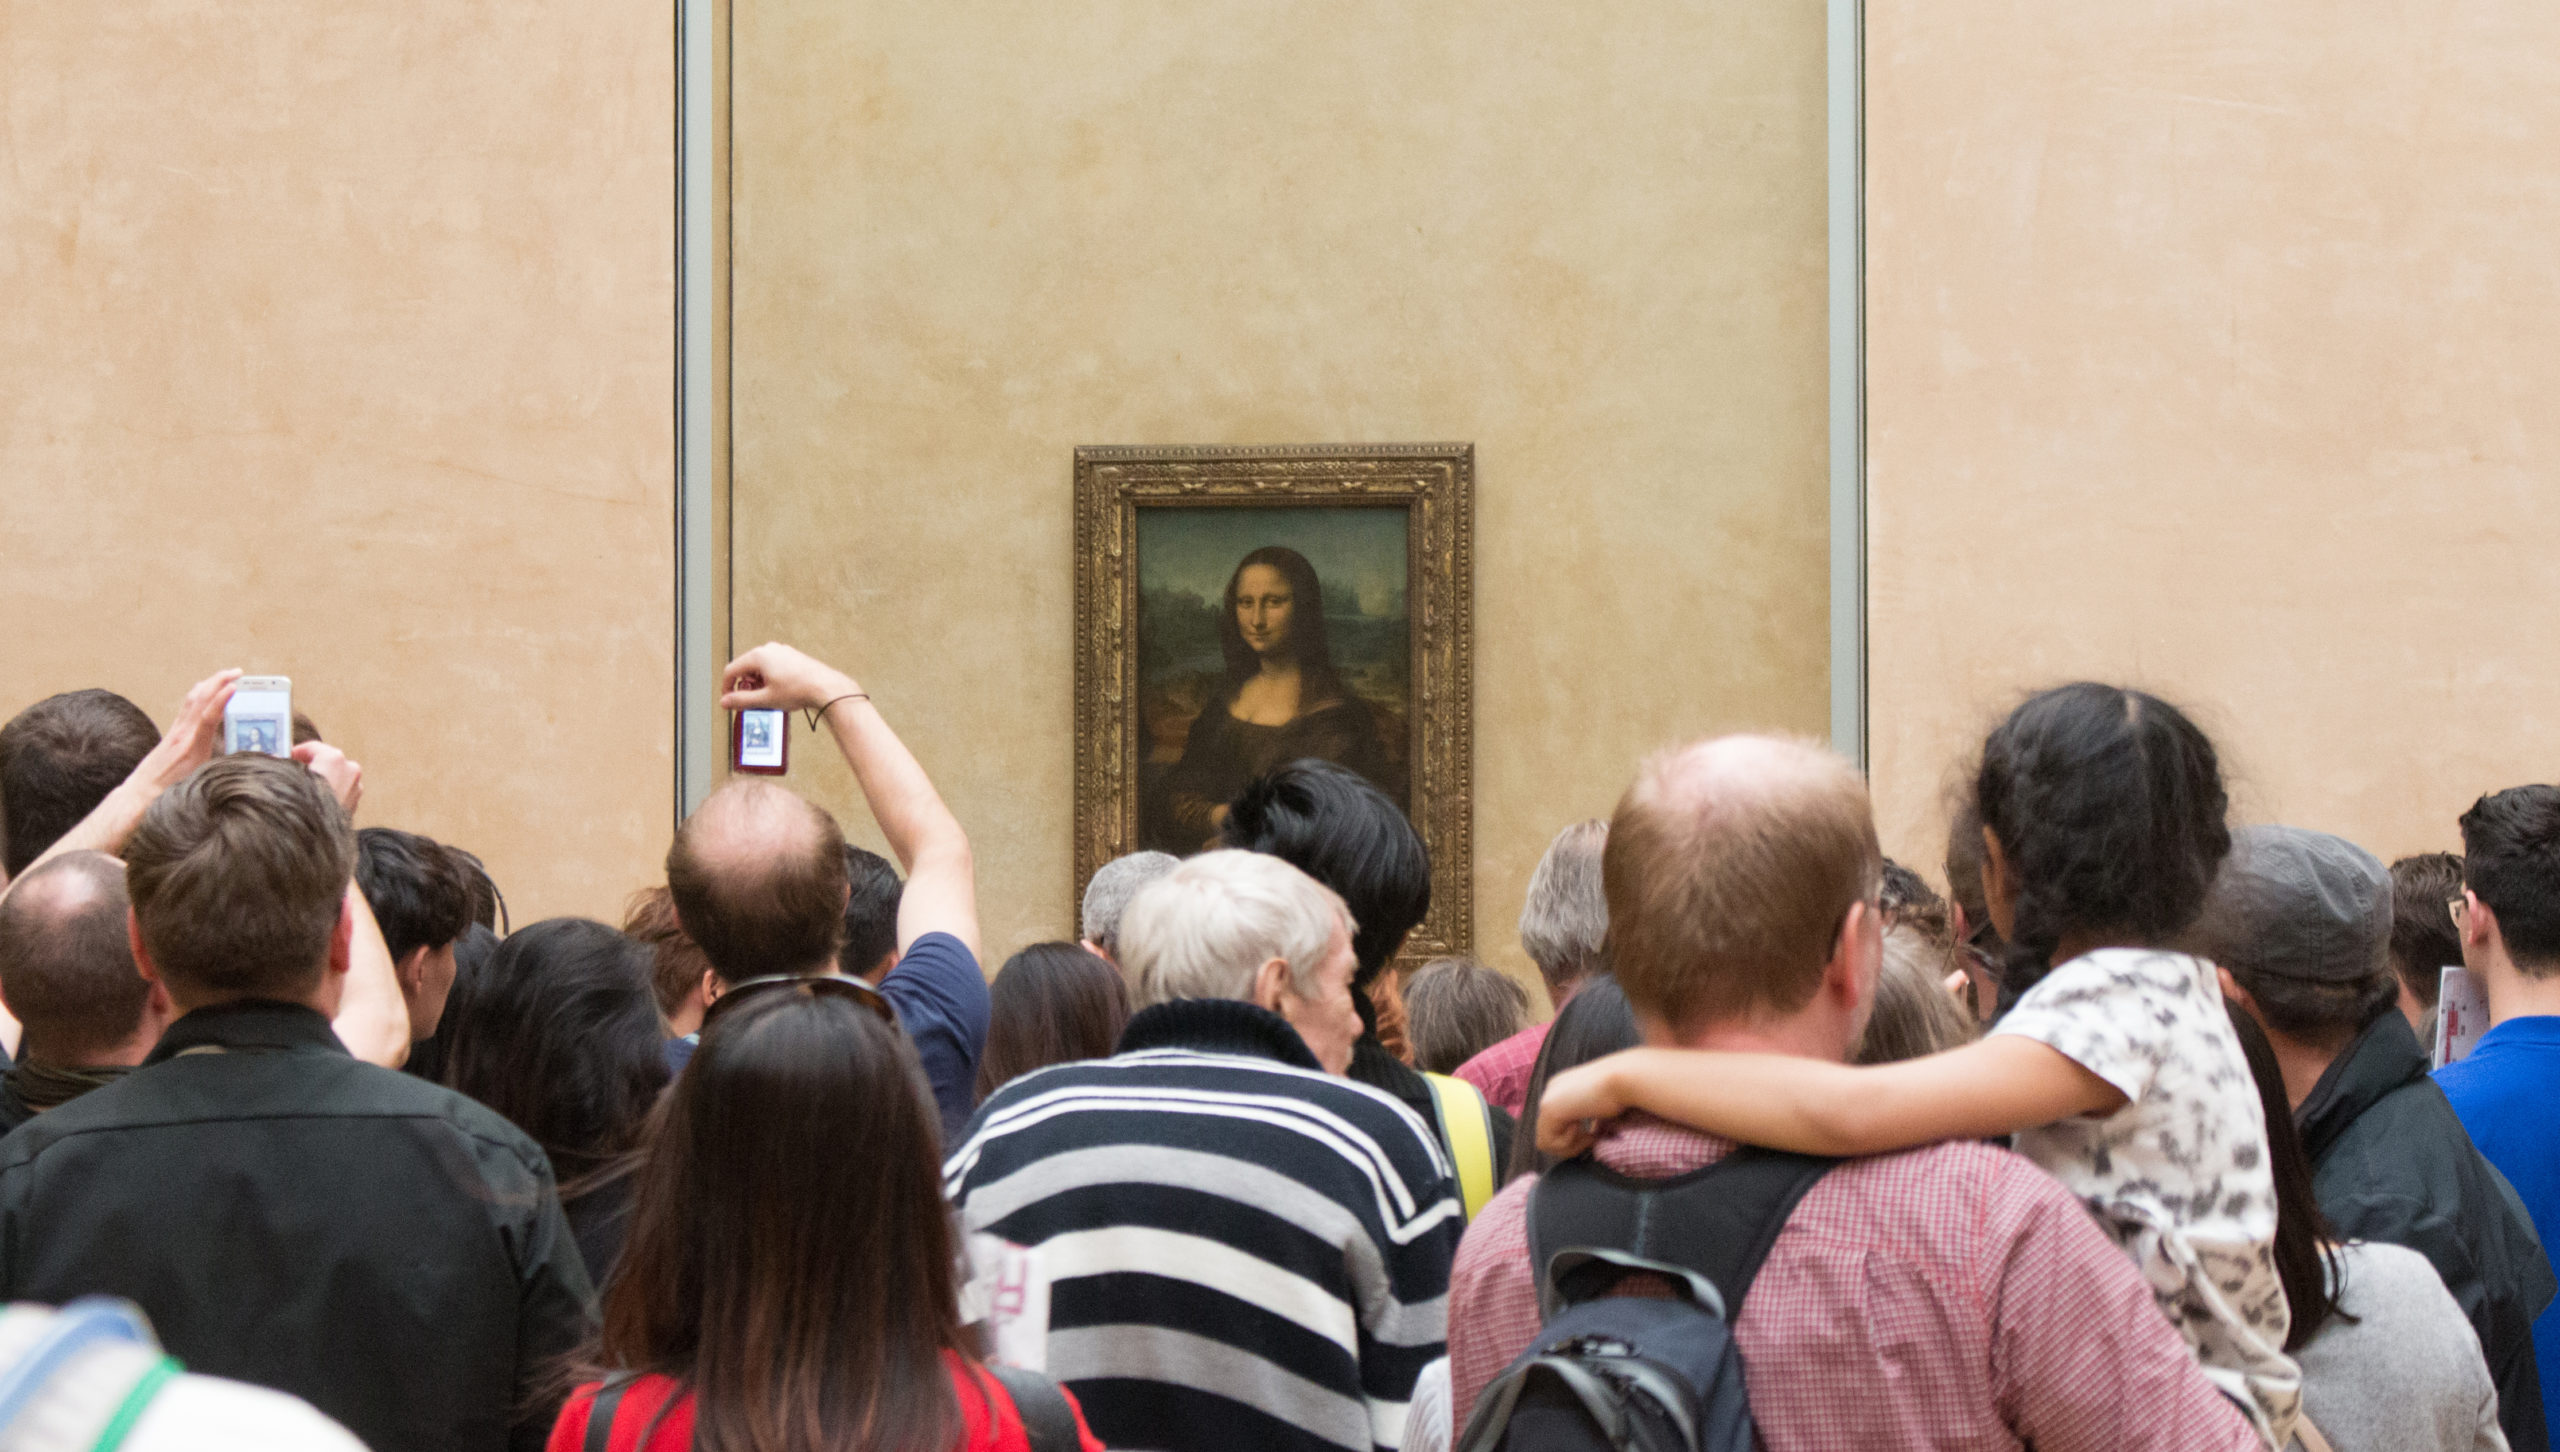 The real Mona Lisa? Prado museum finds Leonardo da Vinci pupil's